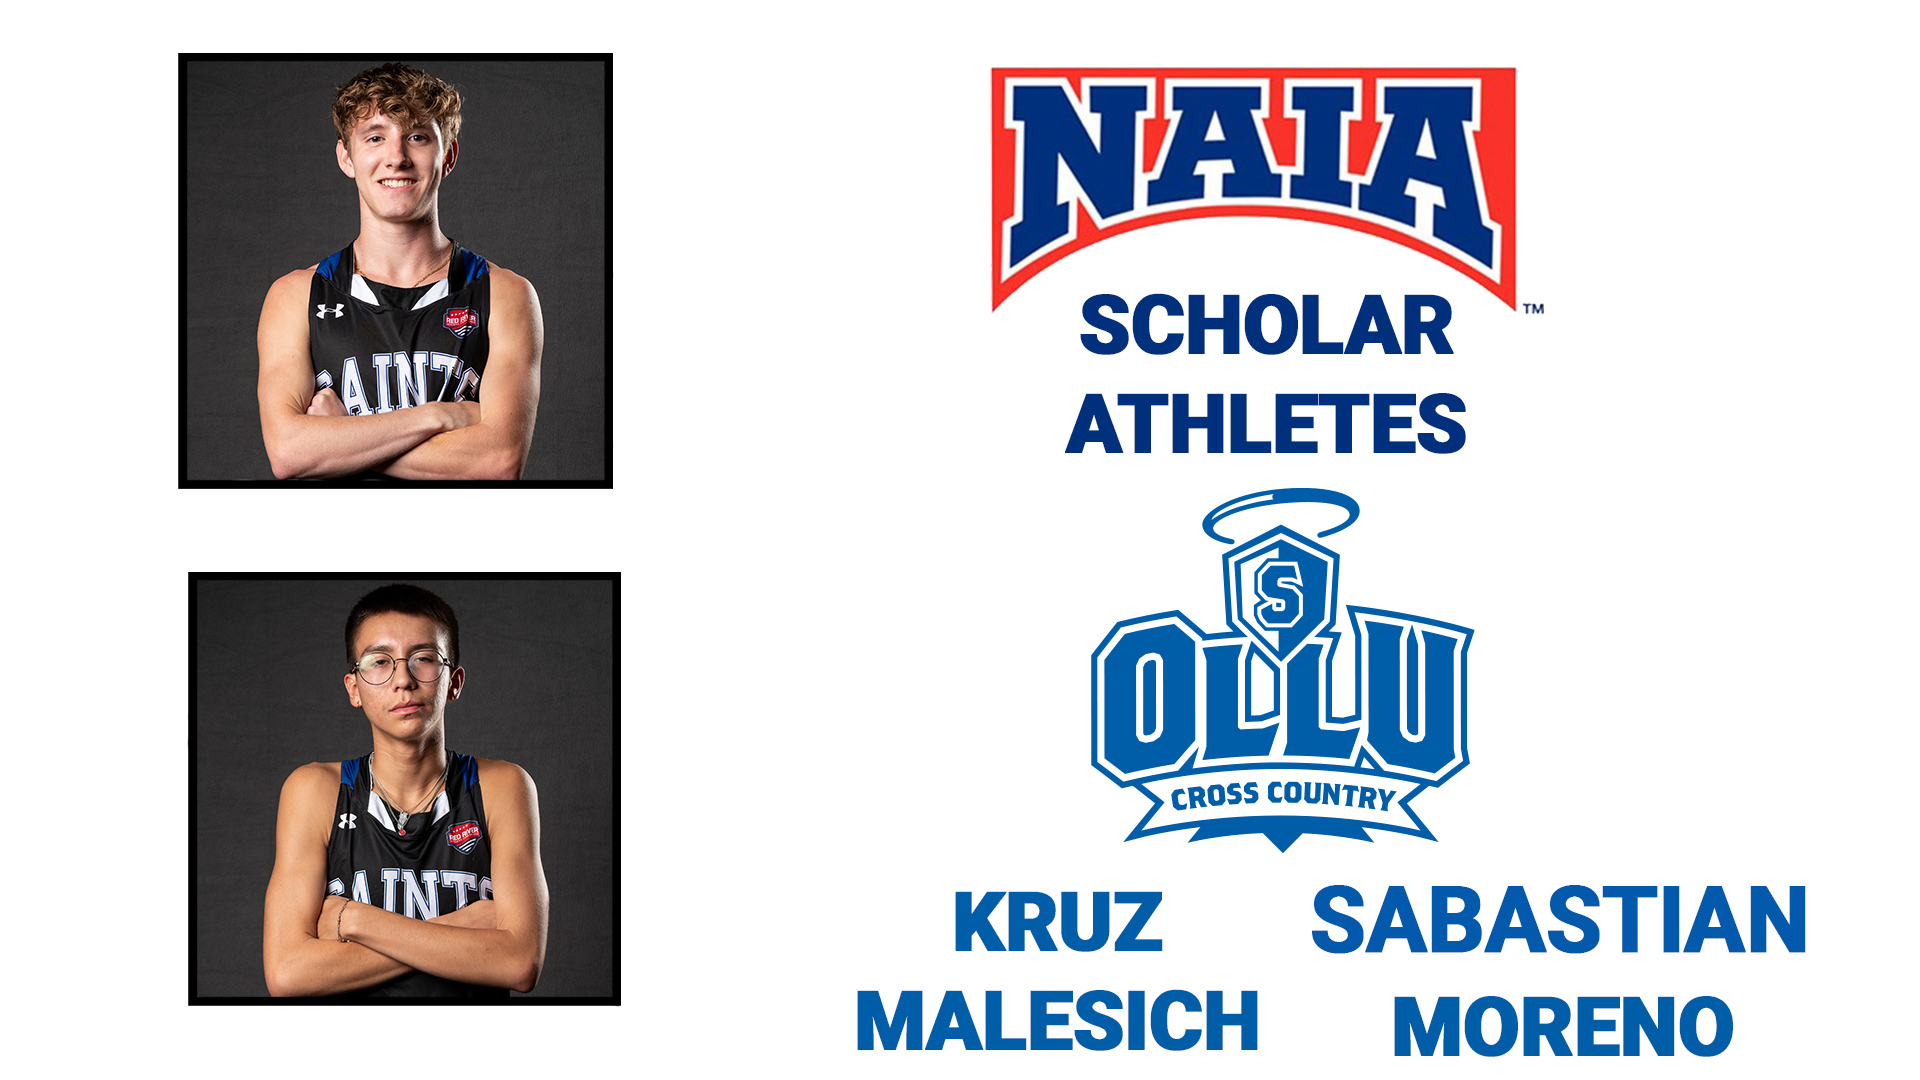 Kruz Malesich and Sebastian Moreno Named NAIA Scholar-Athletes